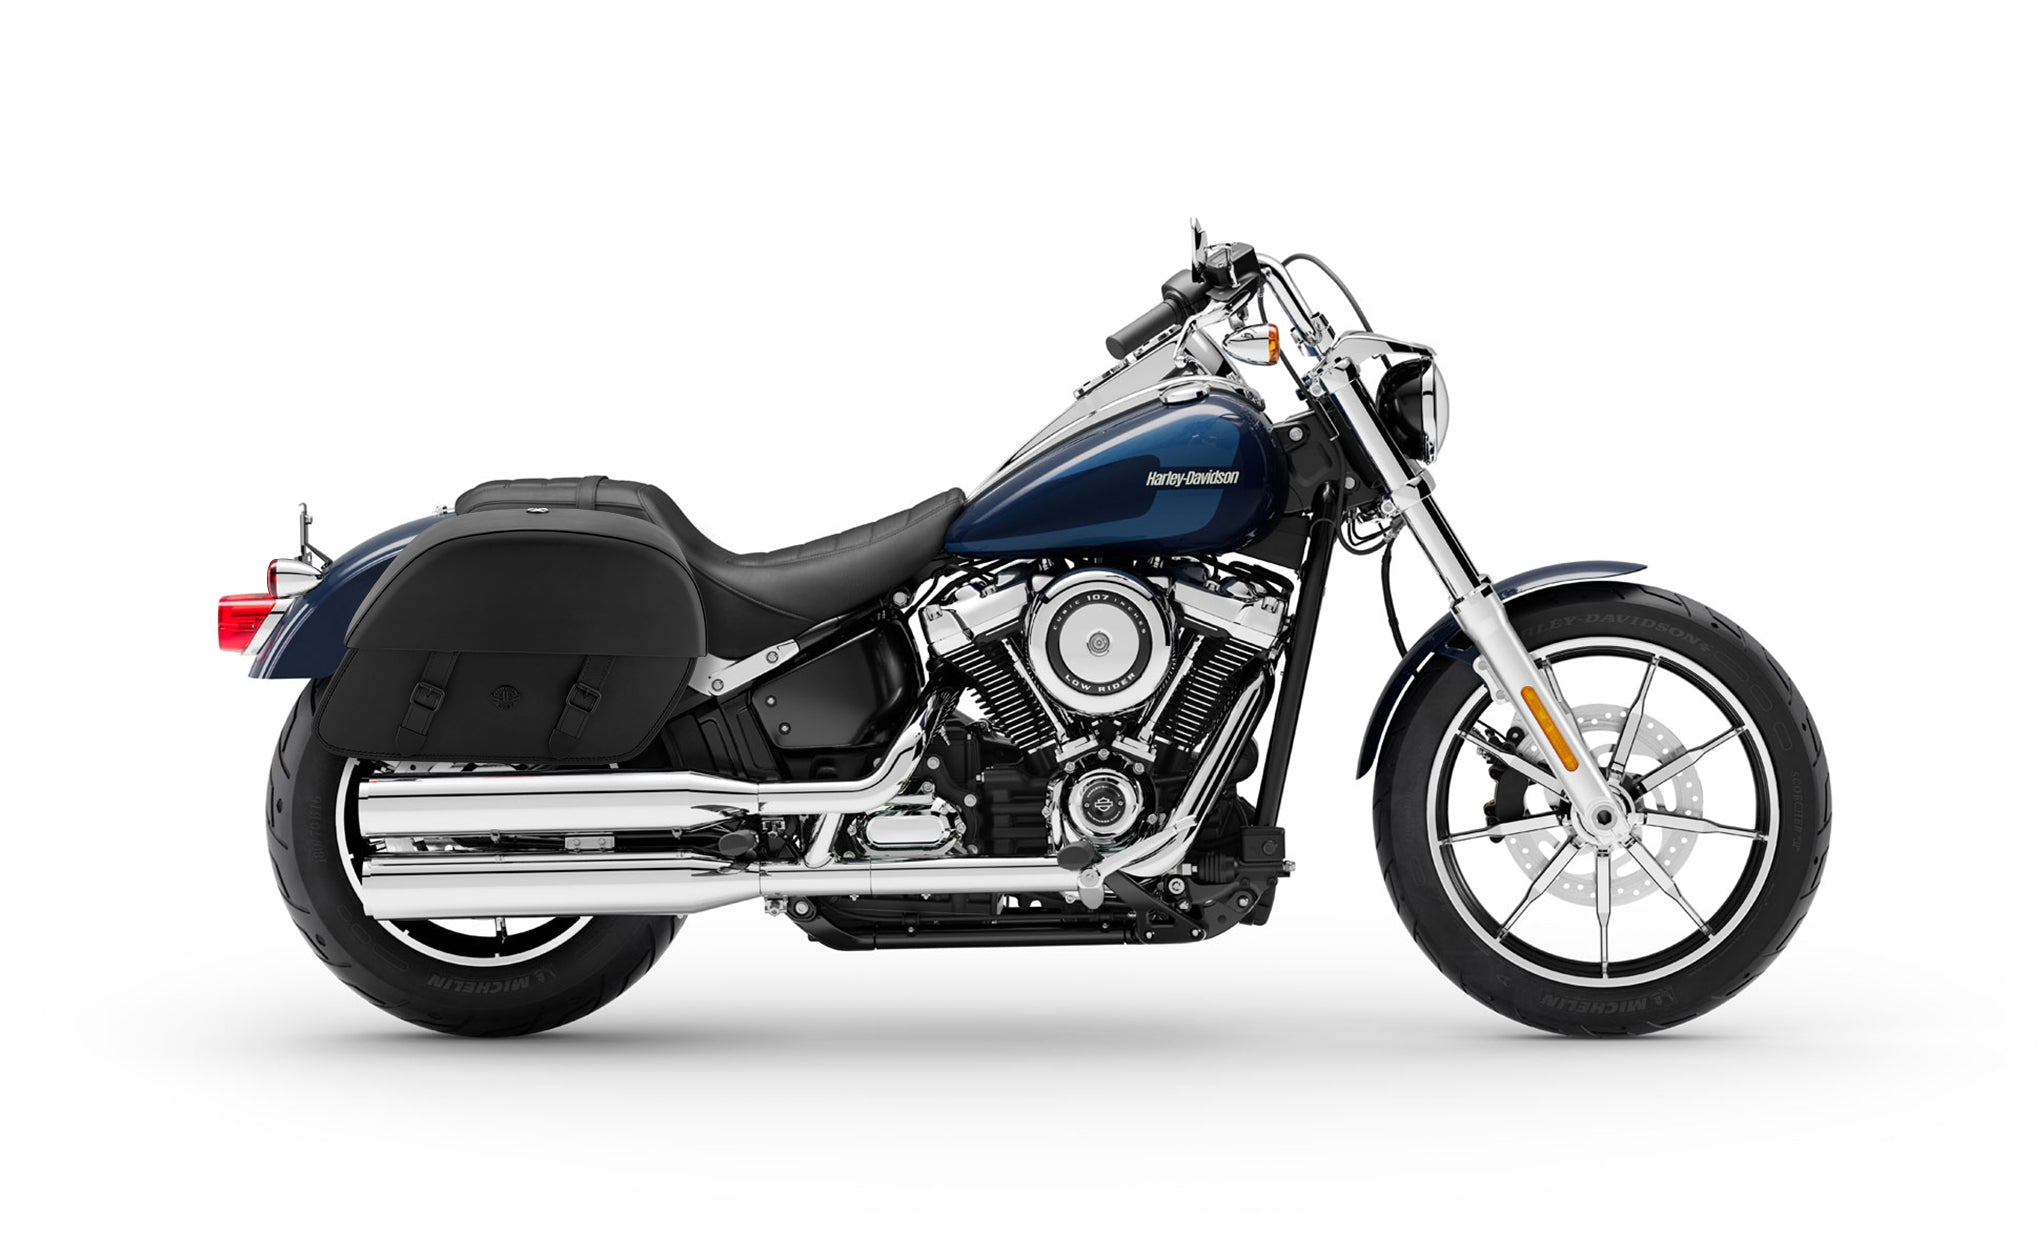 Viking Baelor Large Leather Motorcycle Saddlebags For Harley Davidson Softail Low Rider Fxlr on Bike Photo @expand